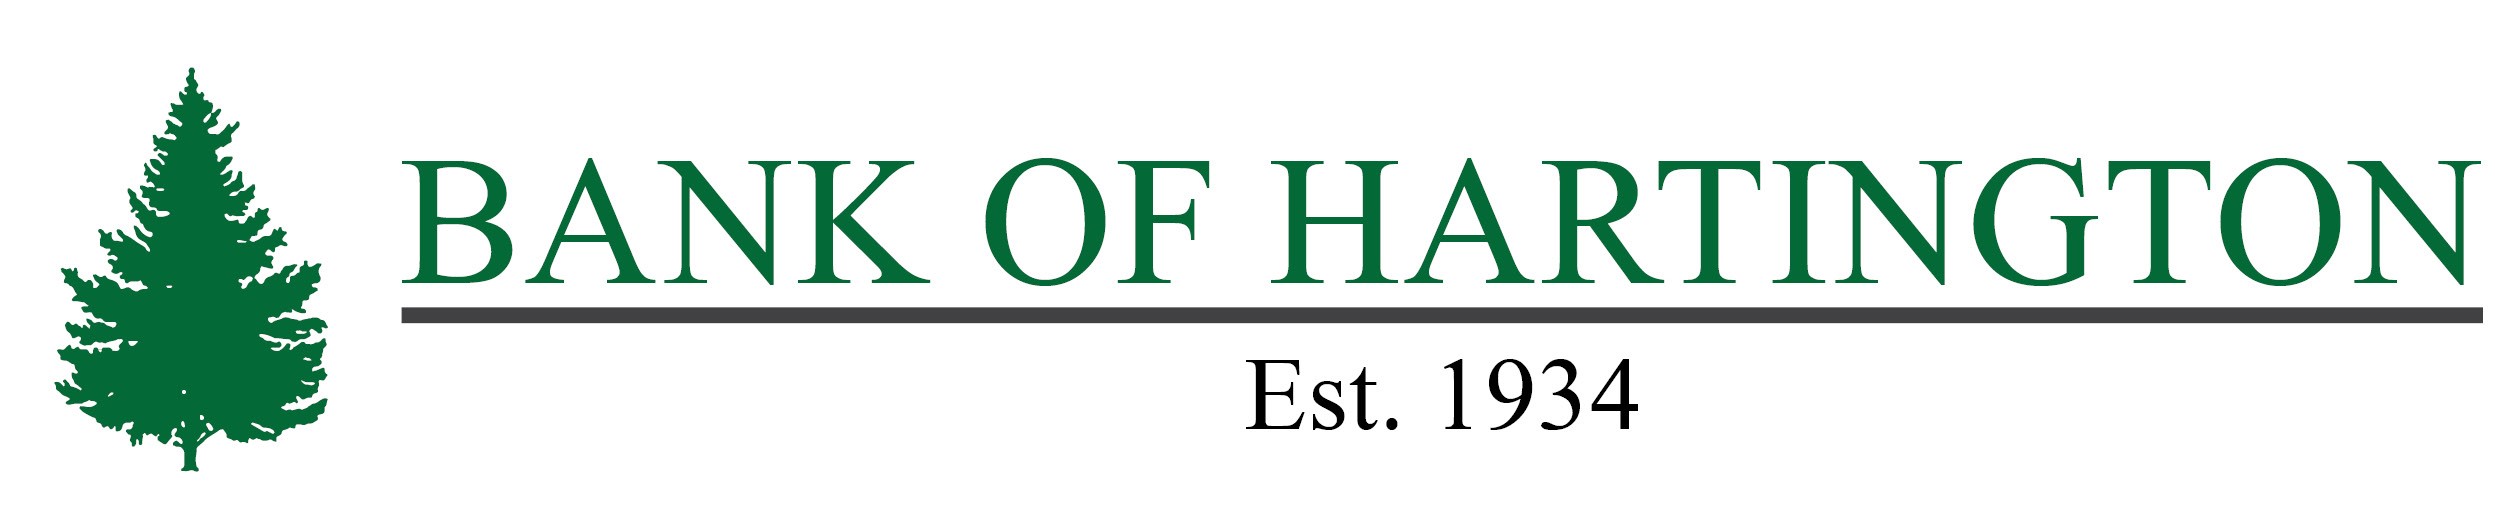 Bank of Hartington logo